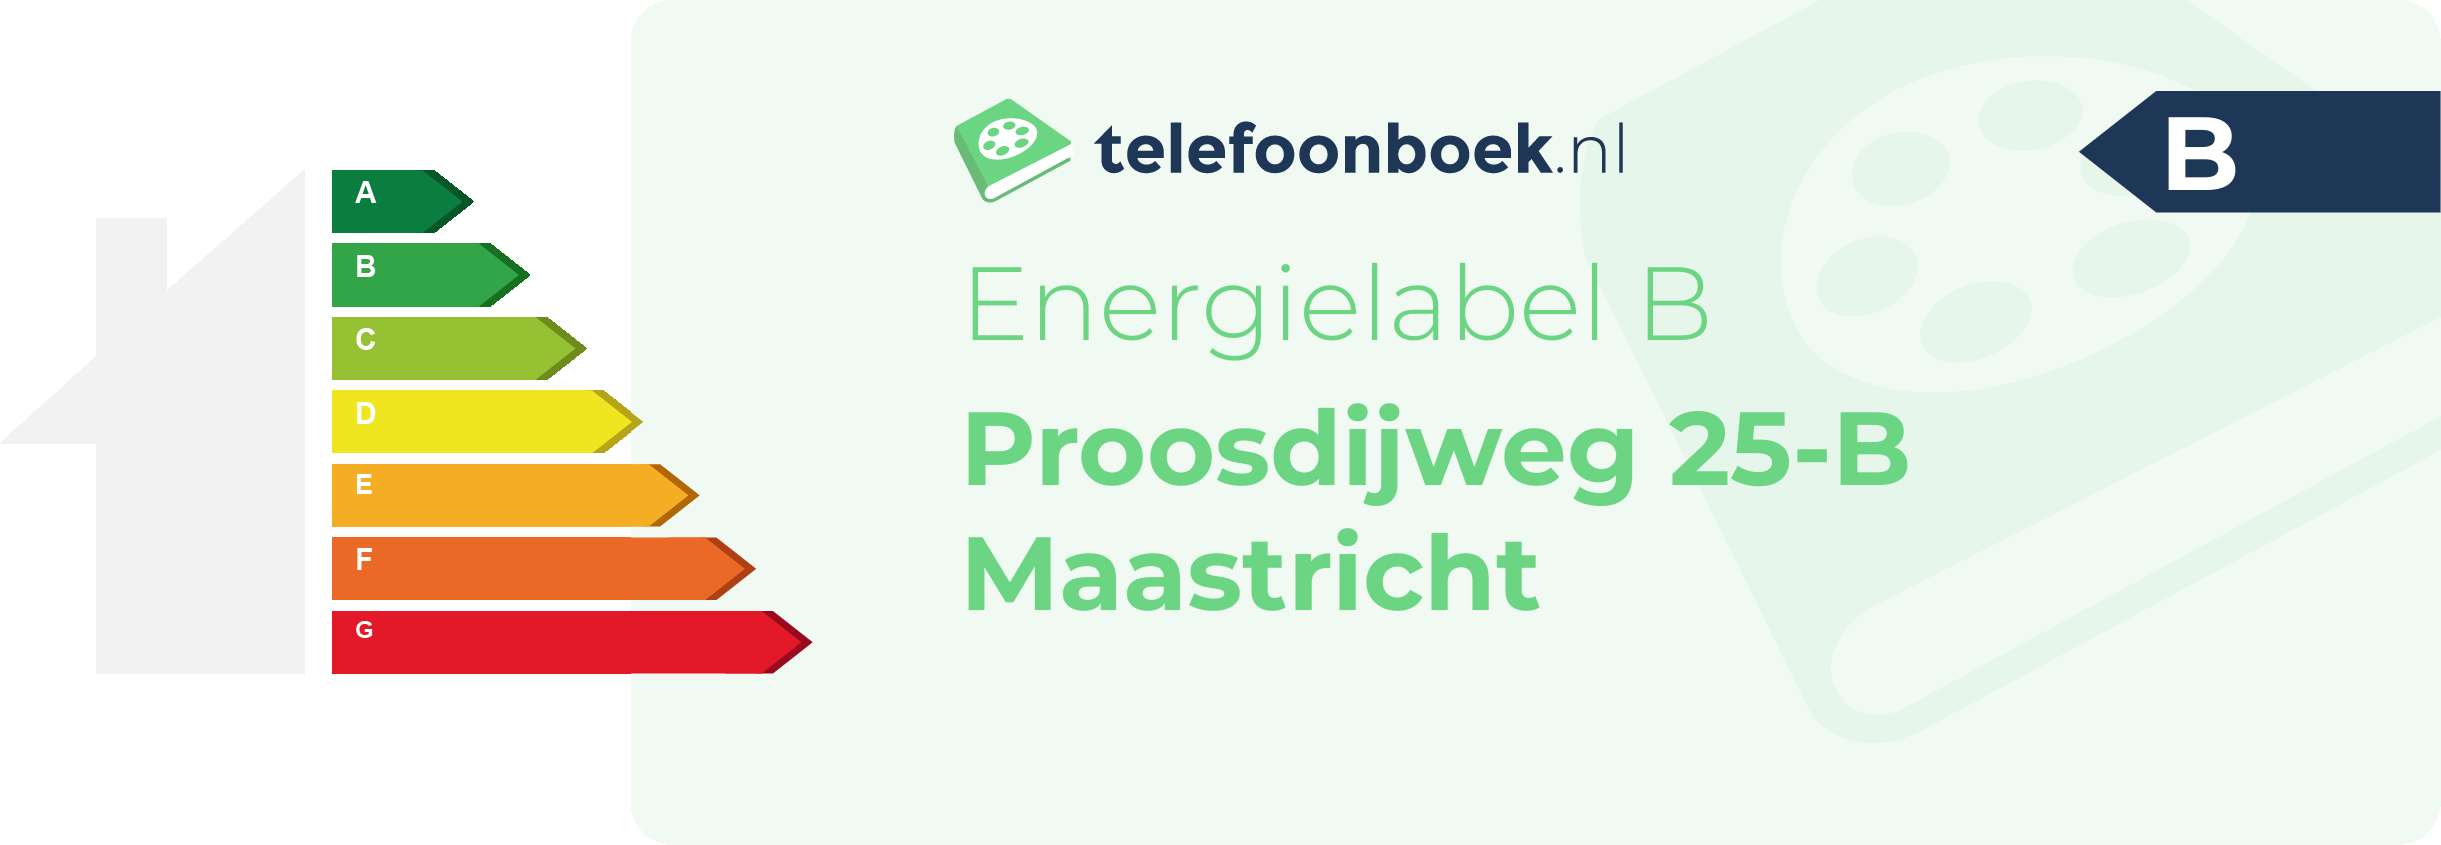 Energielabel Proosdijweg 25-B Maastricht